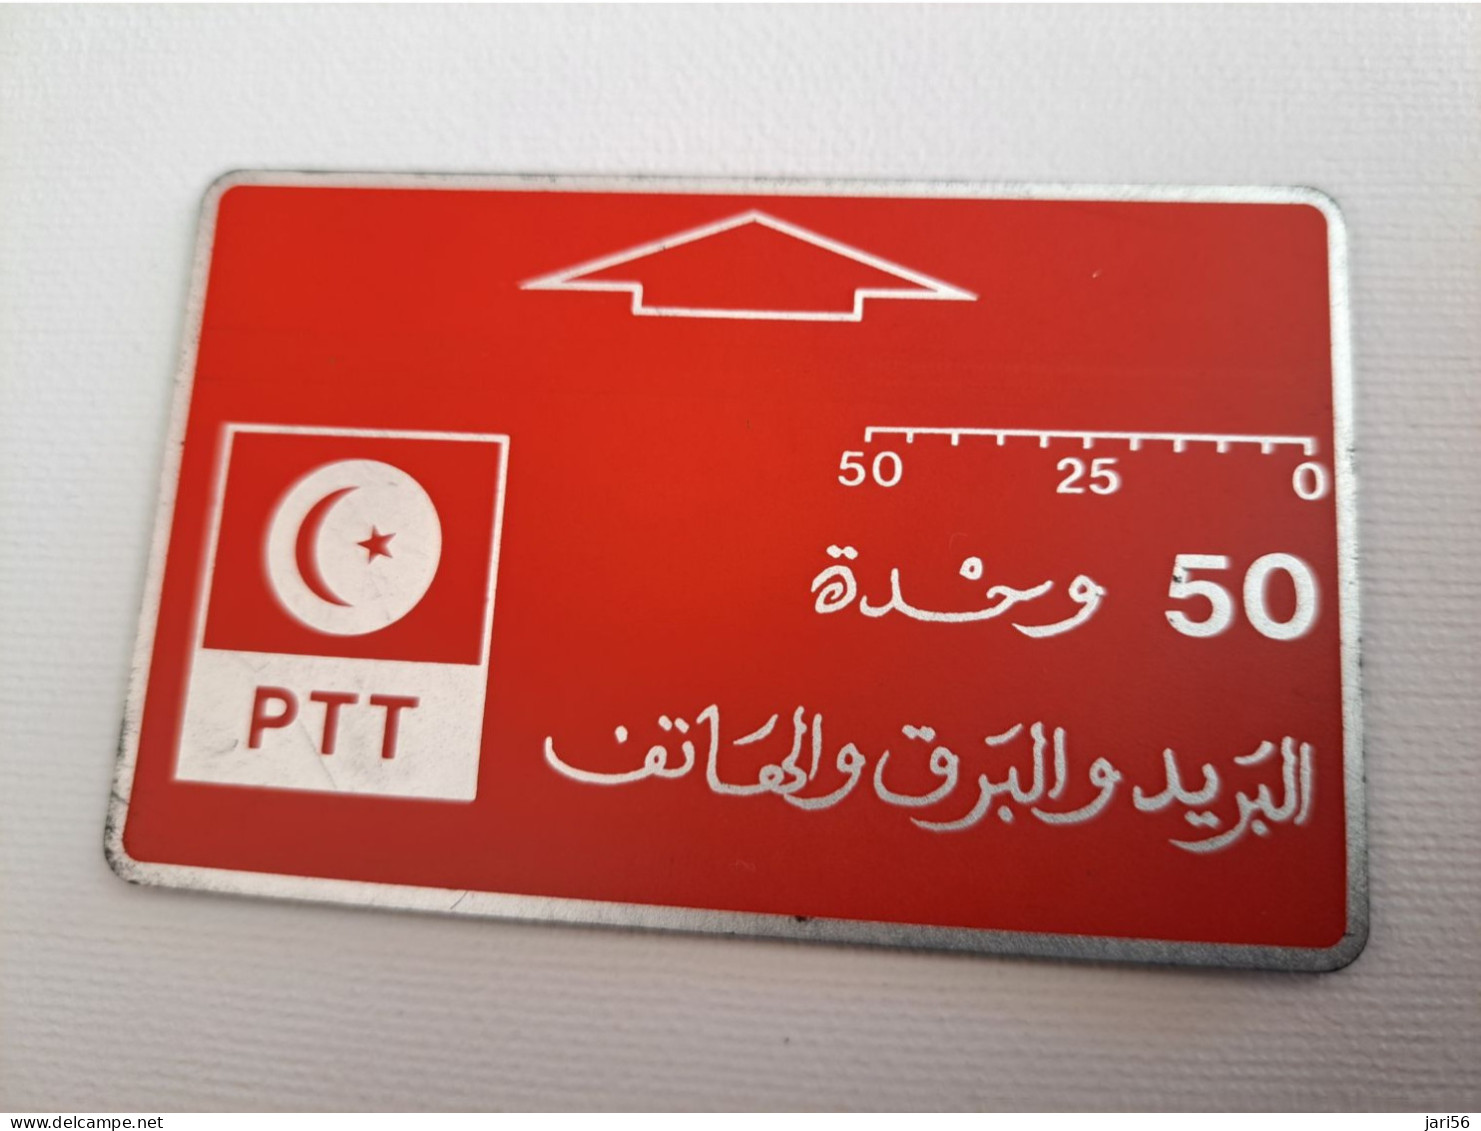 TUNESIA   L&G CARD 50 UNITS /NO NOTCH/ FIRST ISSUE / T10G /     MINT CARD     ** 13518** - Tunisie